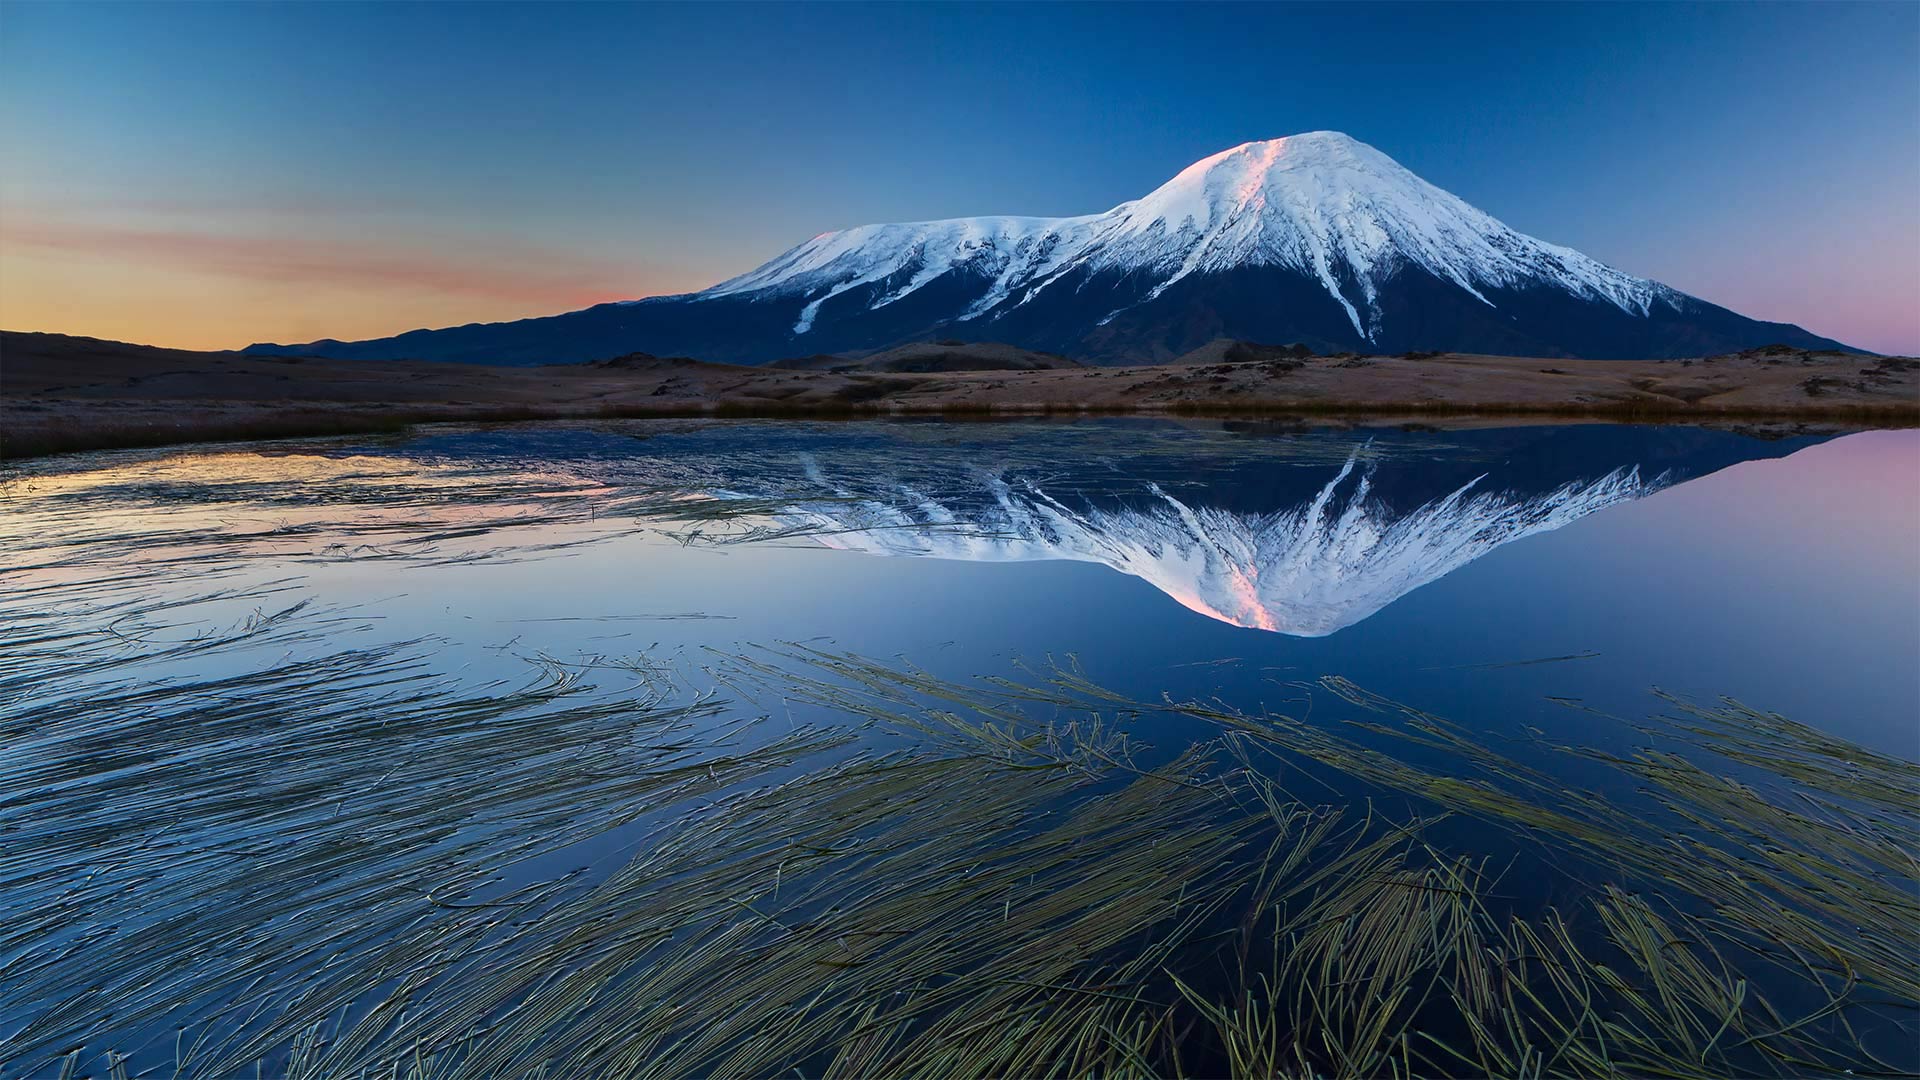 Tolbachik volcanic complex on the Kamchatka Peninsula, Russia - Egor Vlasov/Shutterstock)